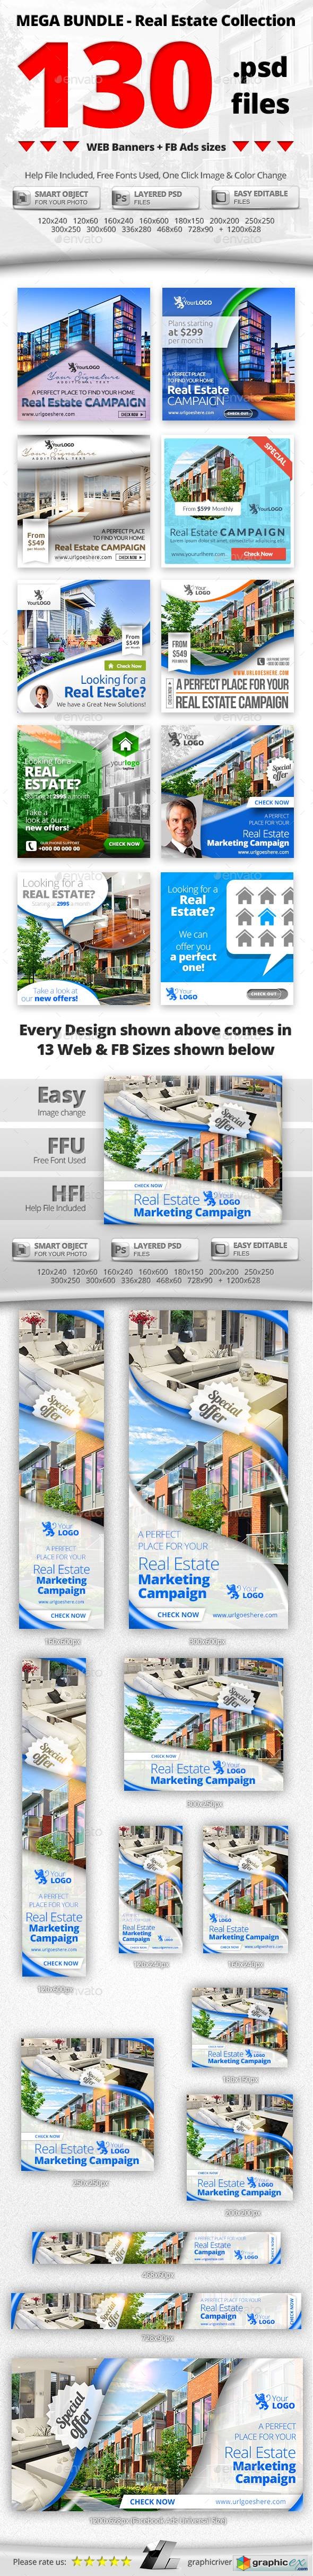 10 in 1 Real Estate Web & FB Banners - Mega Bundle 2